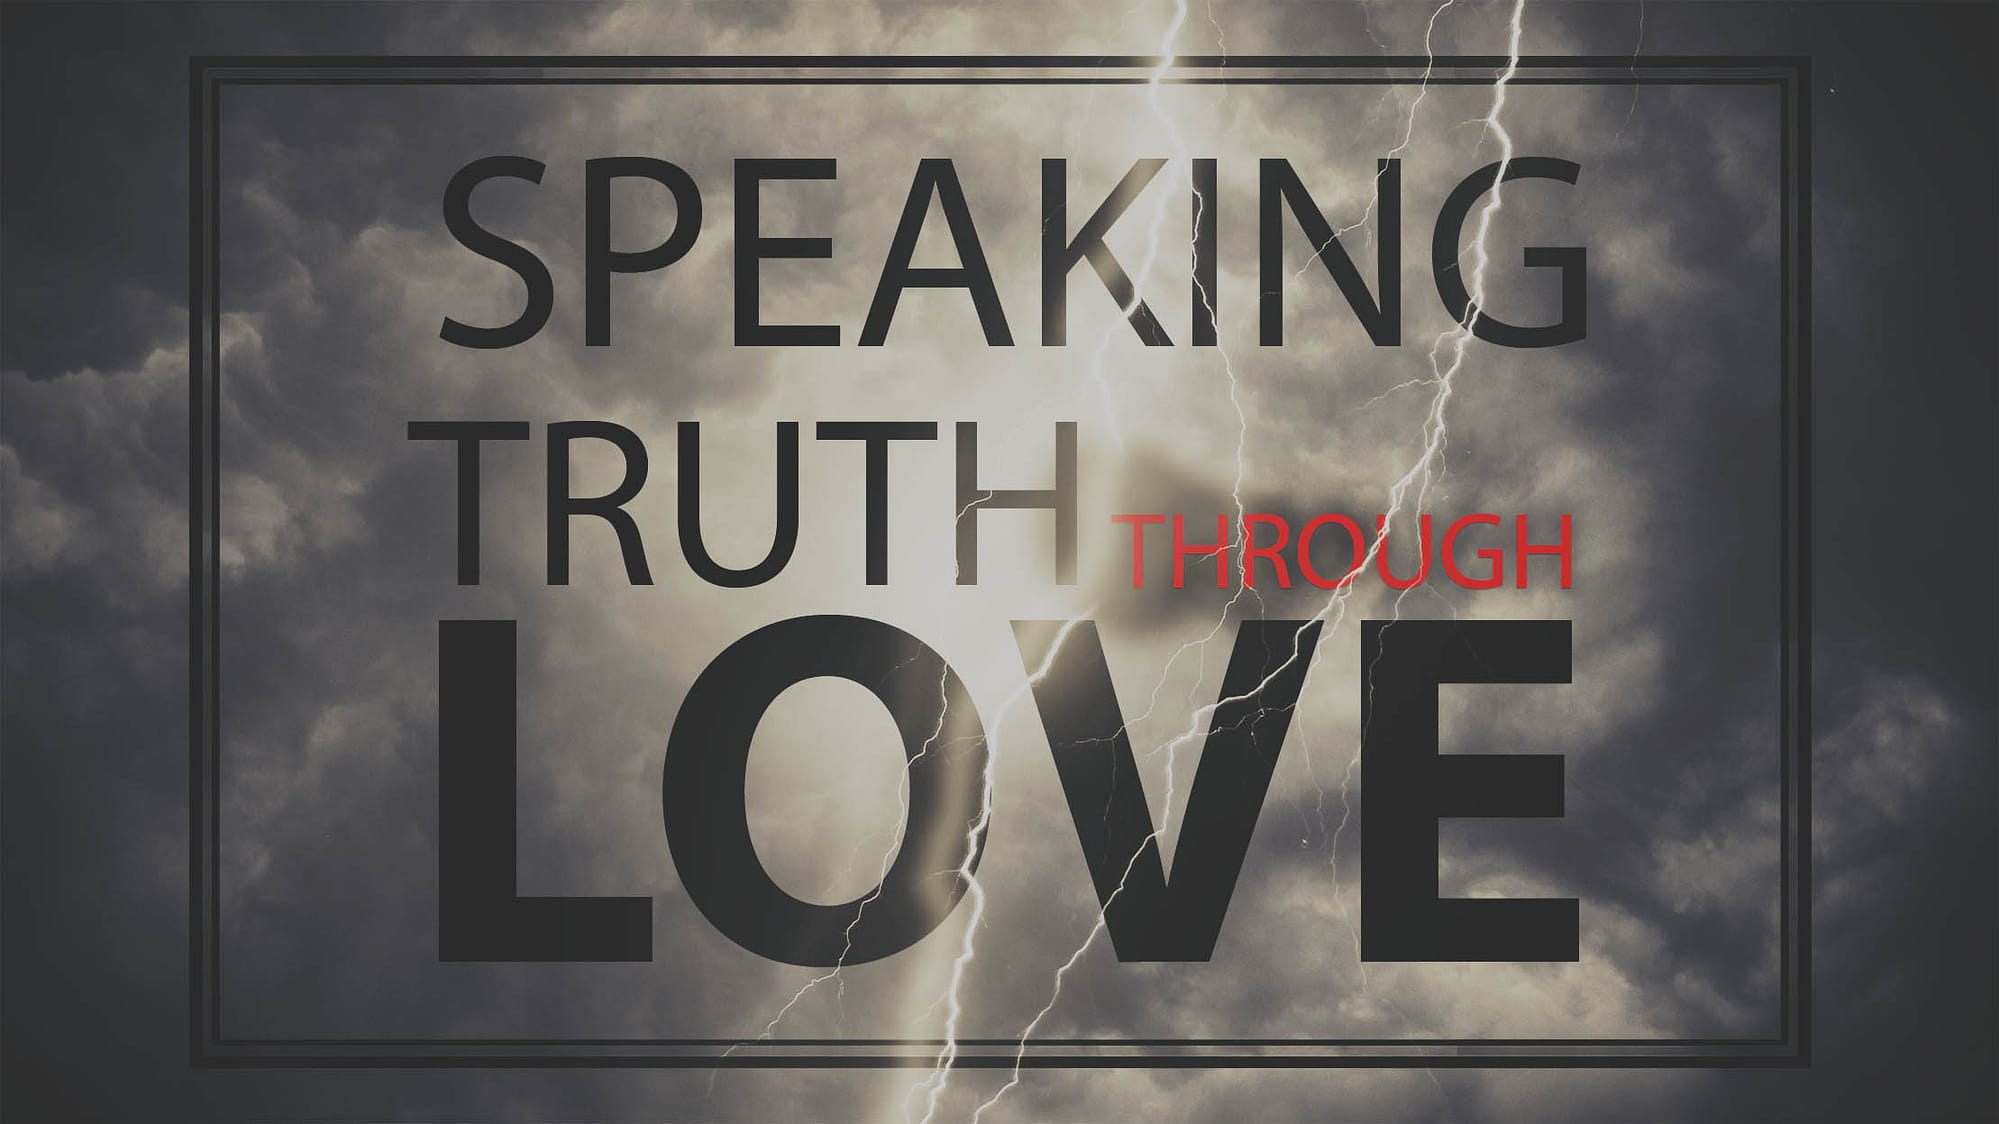 Speaking Truth THROUGH Love